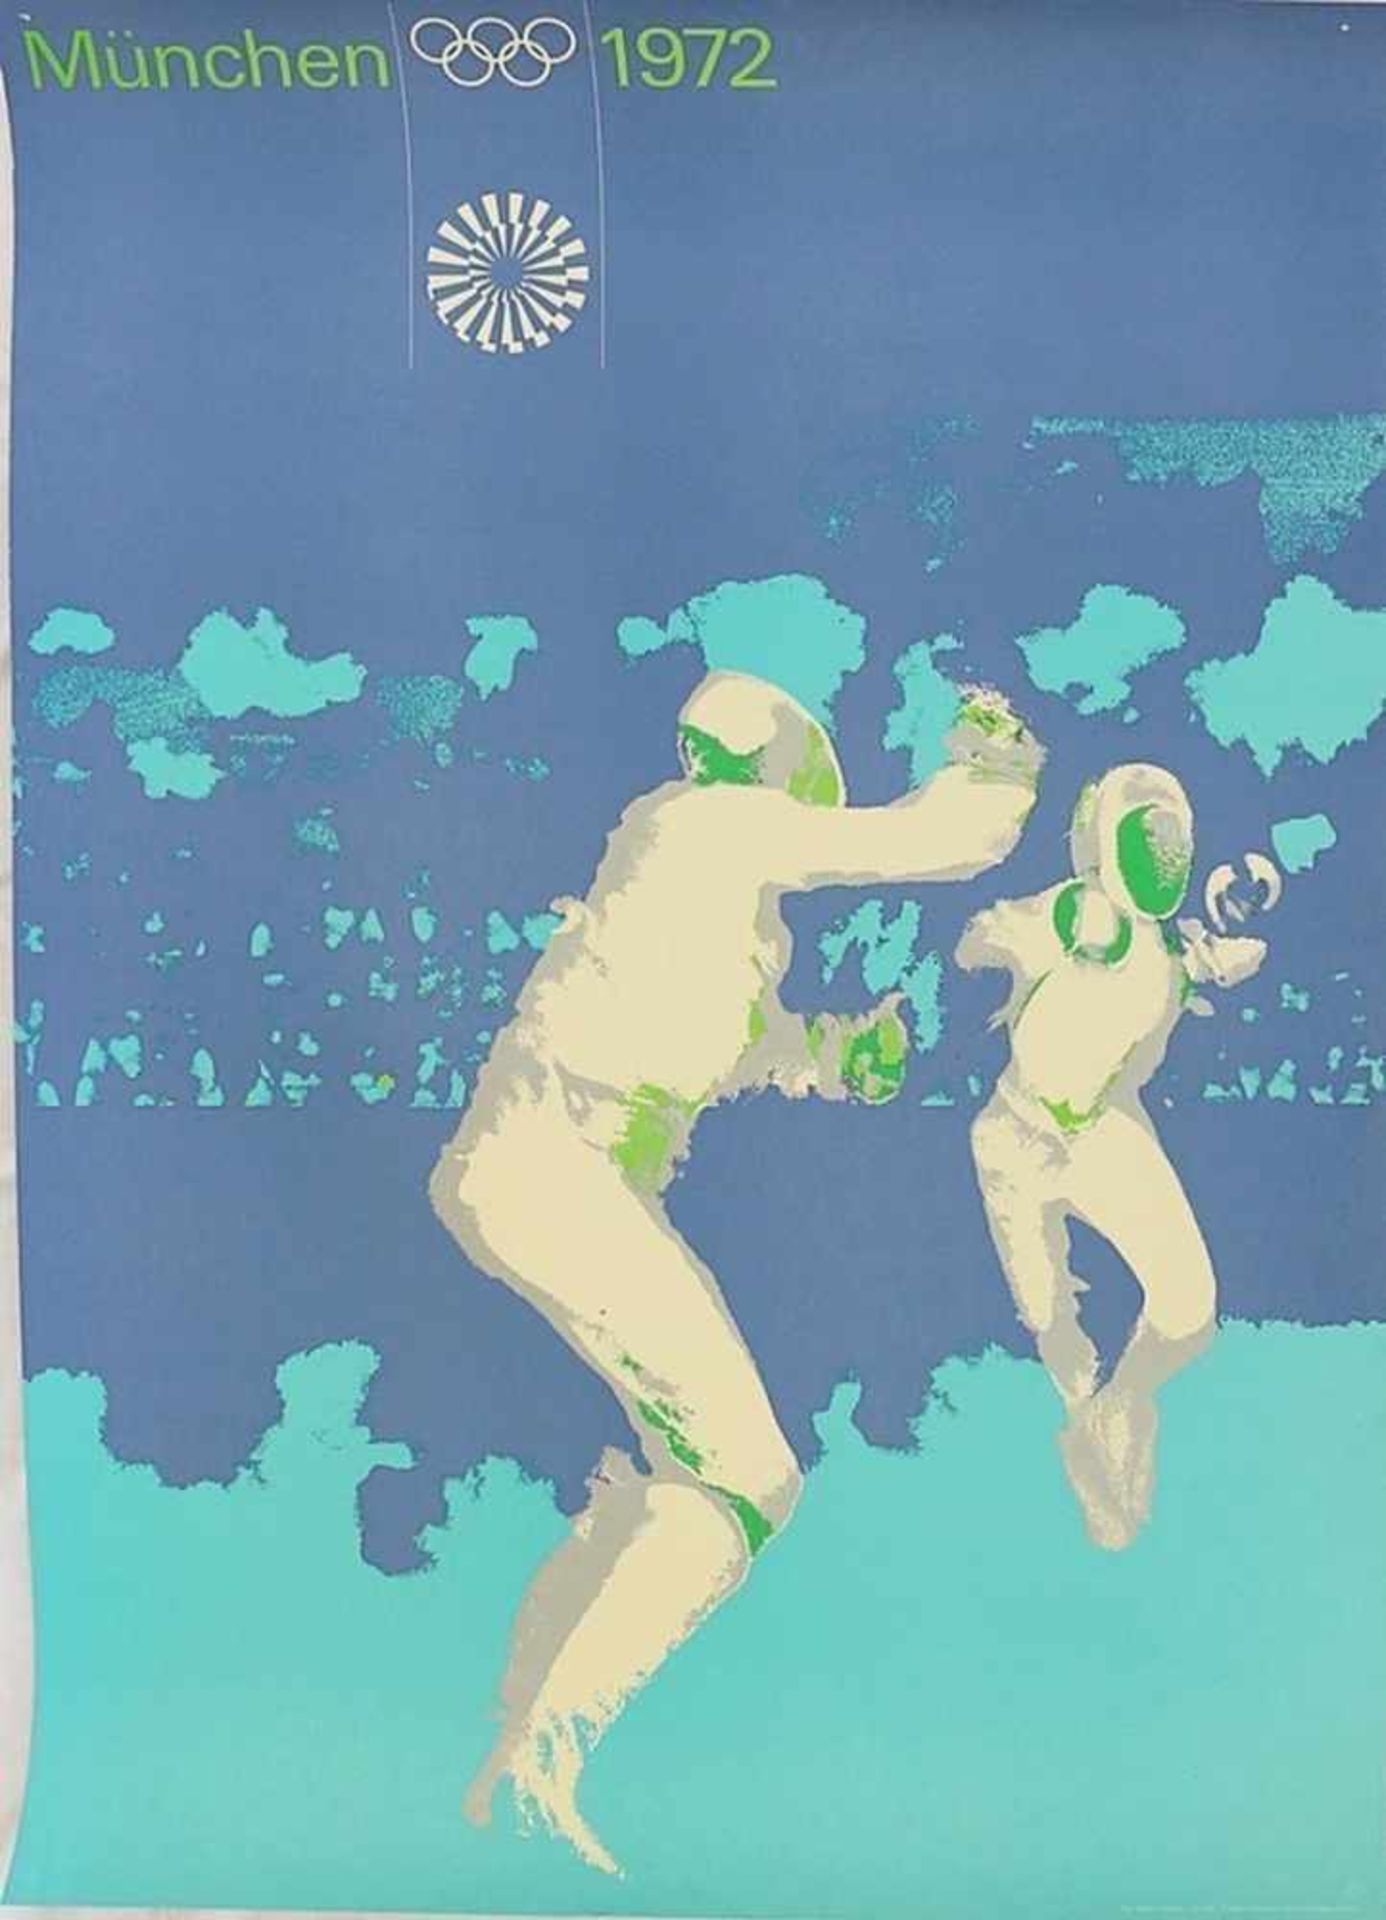 Olympia - Plakat "Fechten", München 1972, Foto Gaebele, gedruckt v. Klein u. Volbert München,